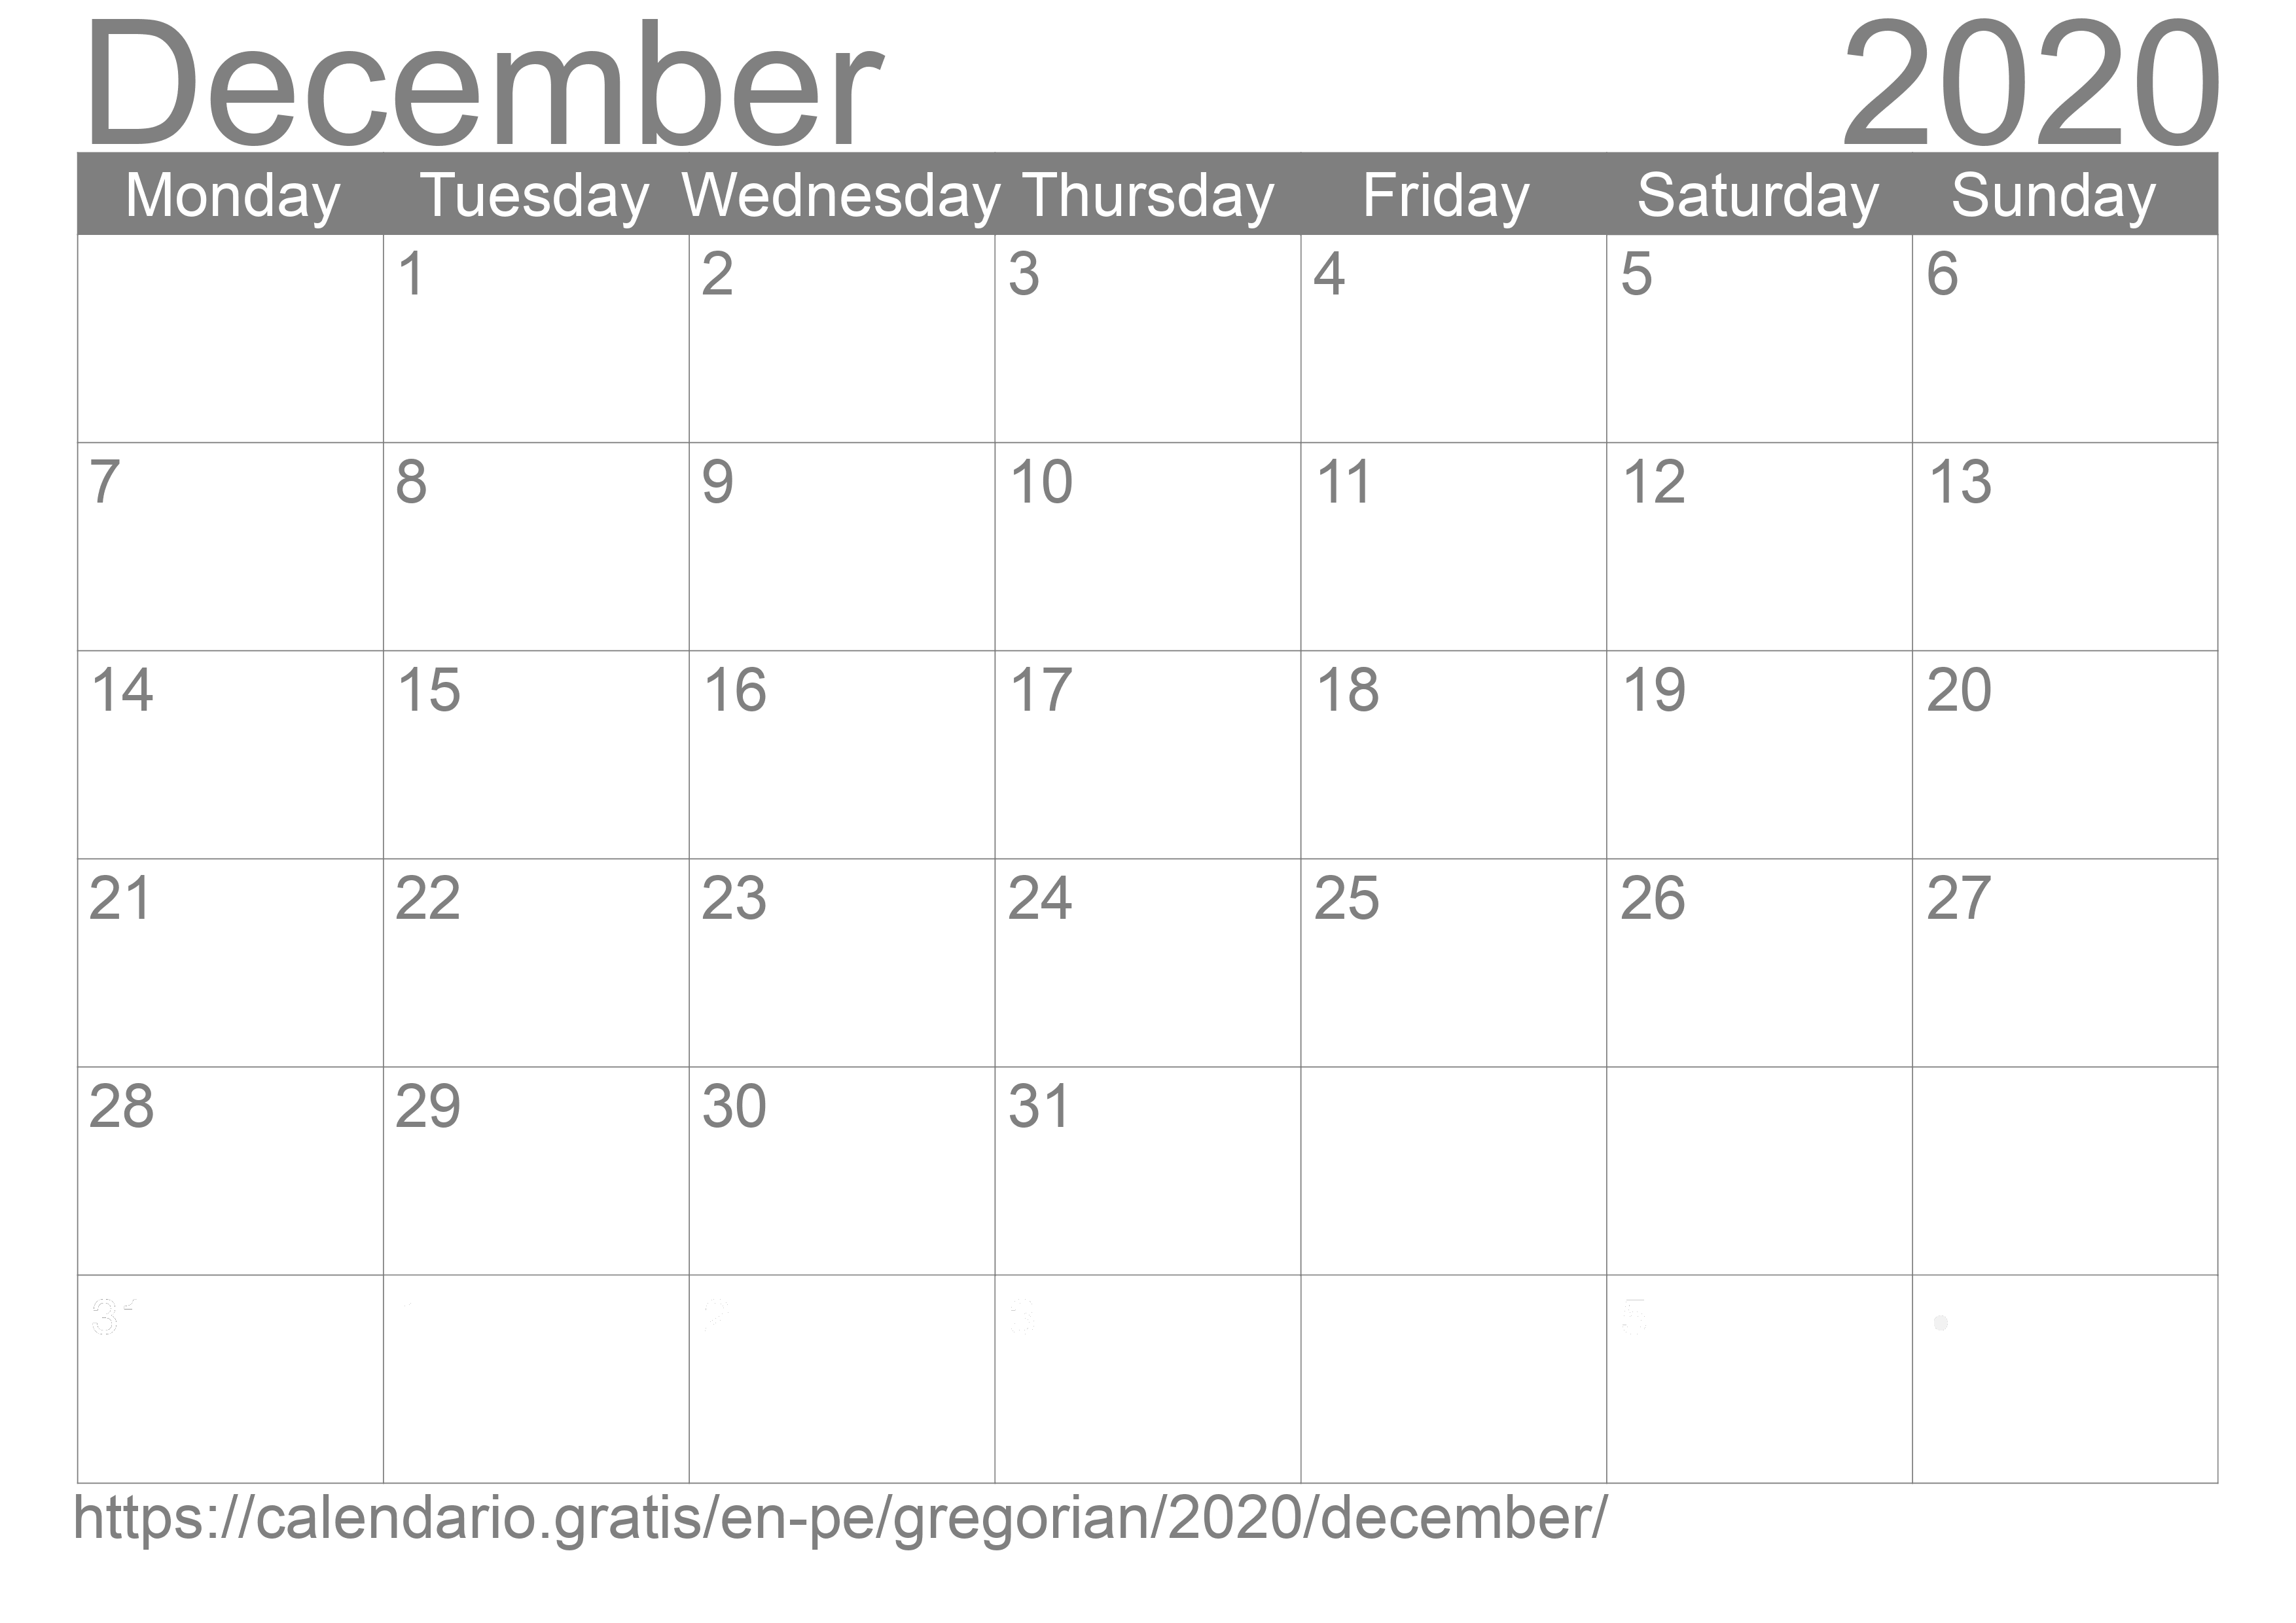 Calendar December 2020 to print